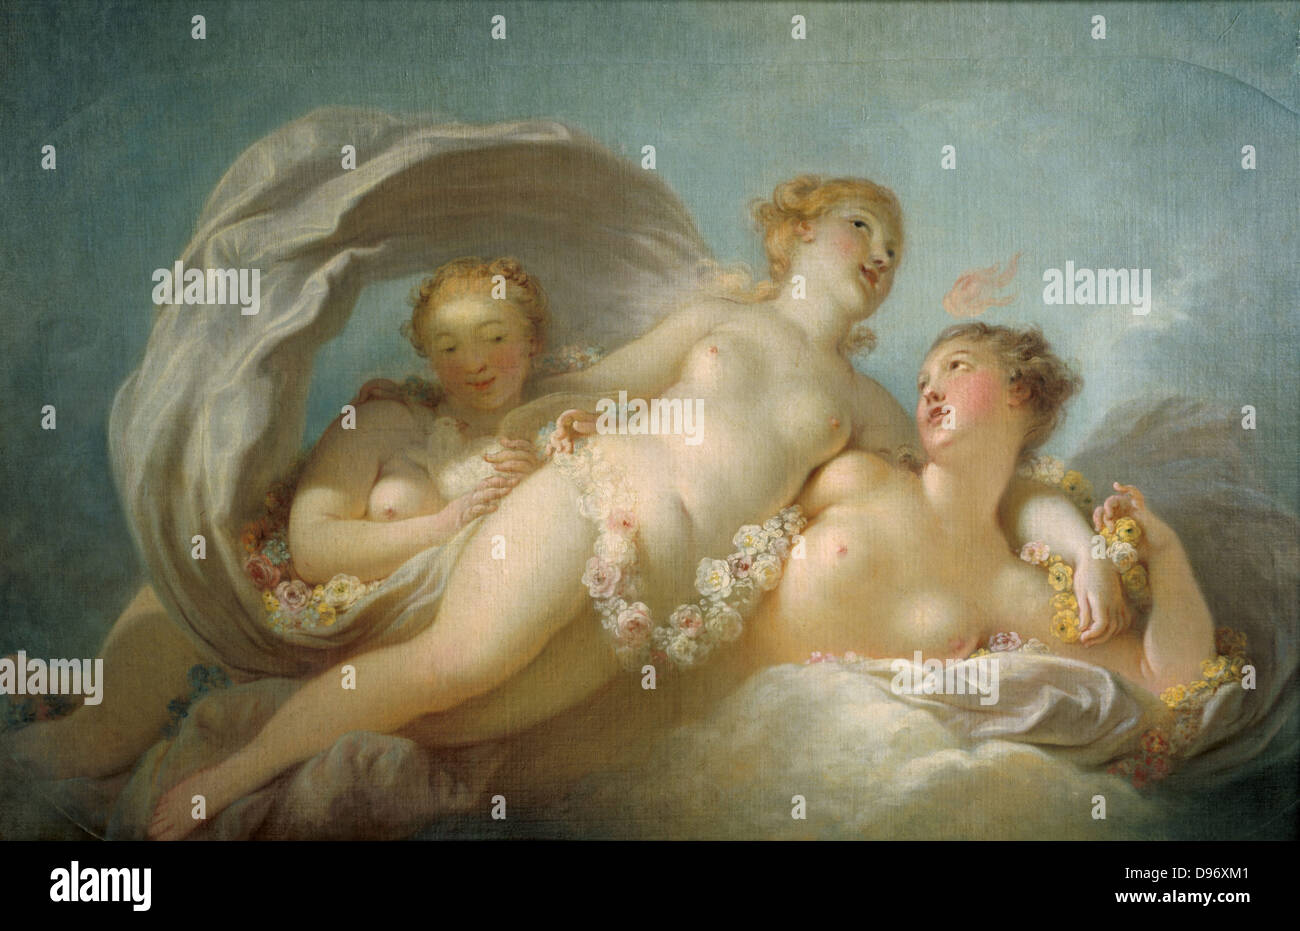 The Three Graces'. Jean-Honoré Fragonard (1732-1806) French painter. Stock Photo